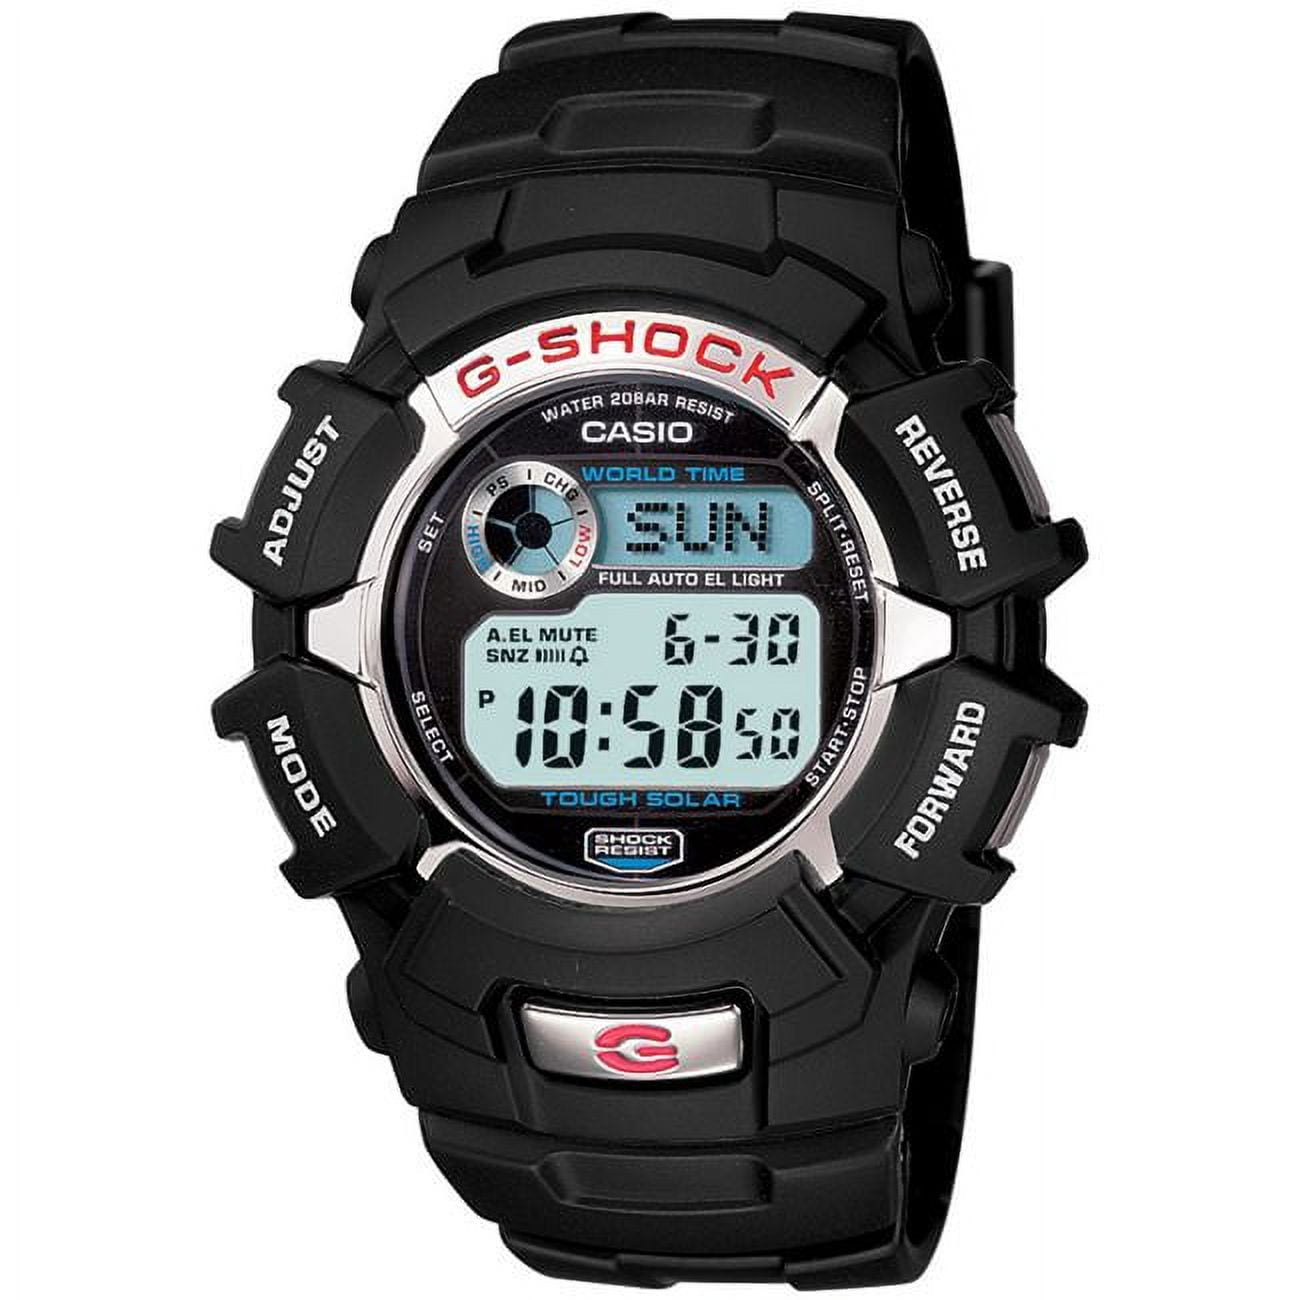 Casio Men's G-Shock Solar-Powered Black Resin Sport Watch 